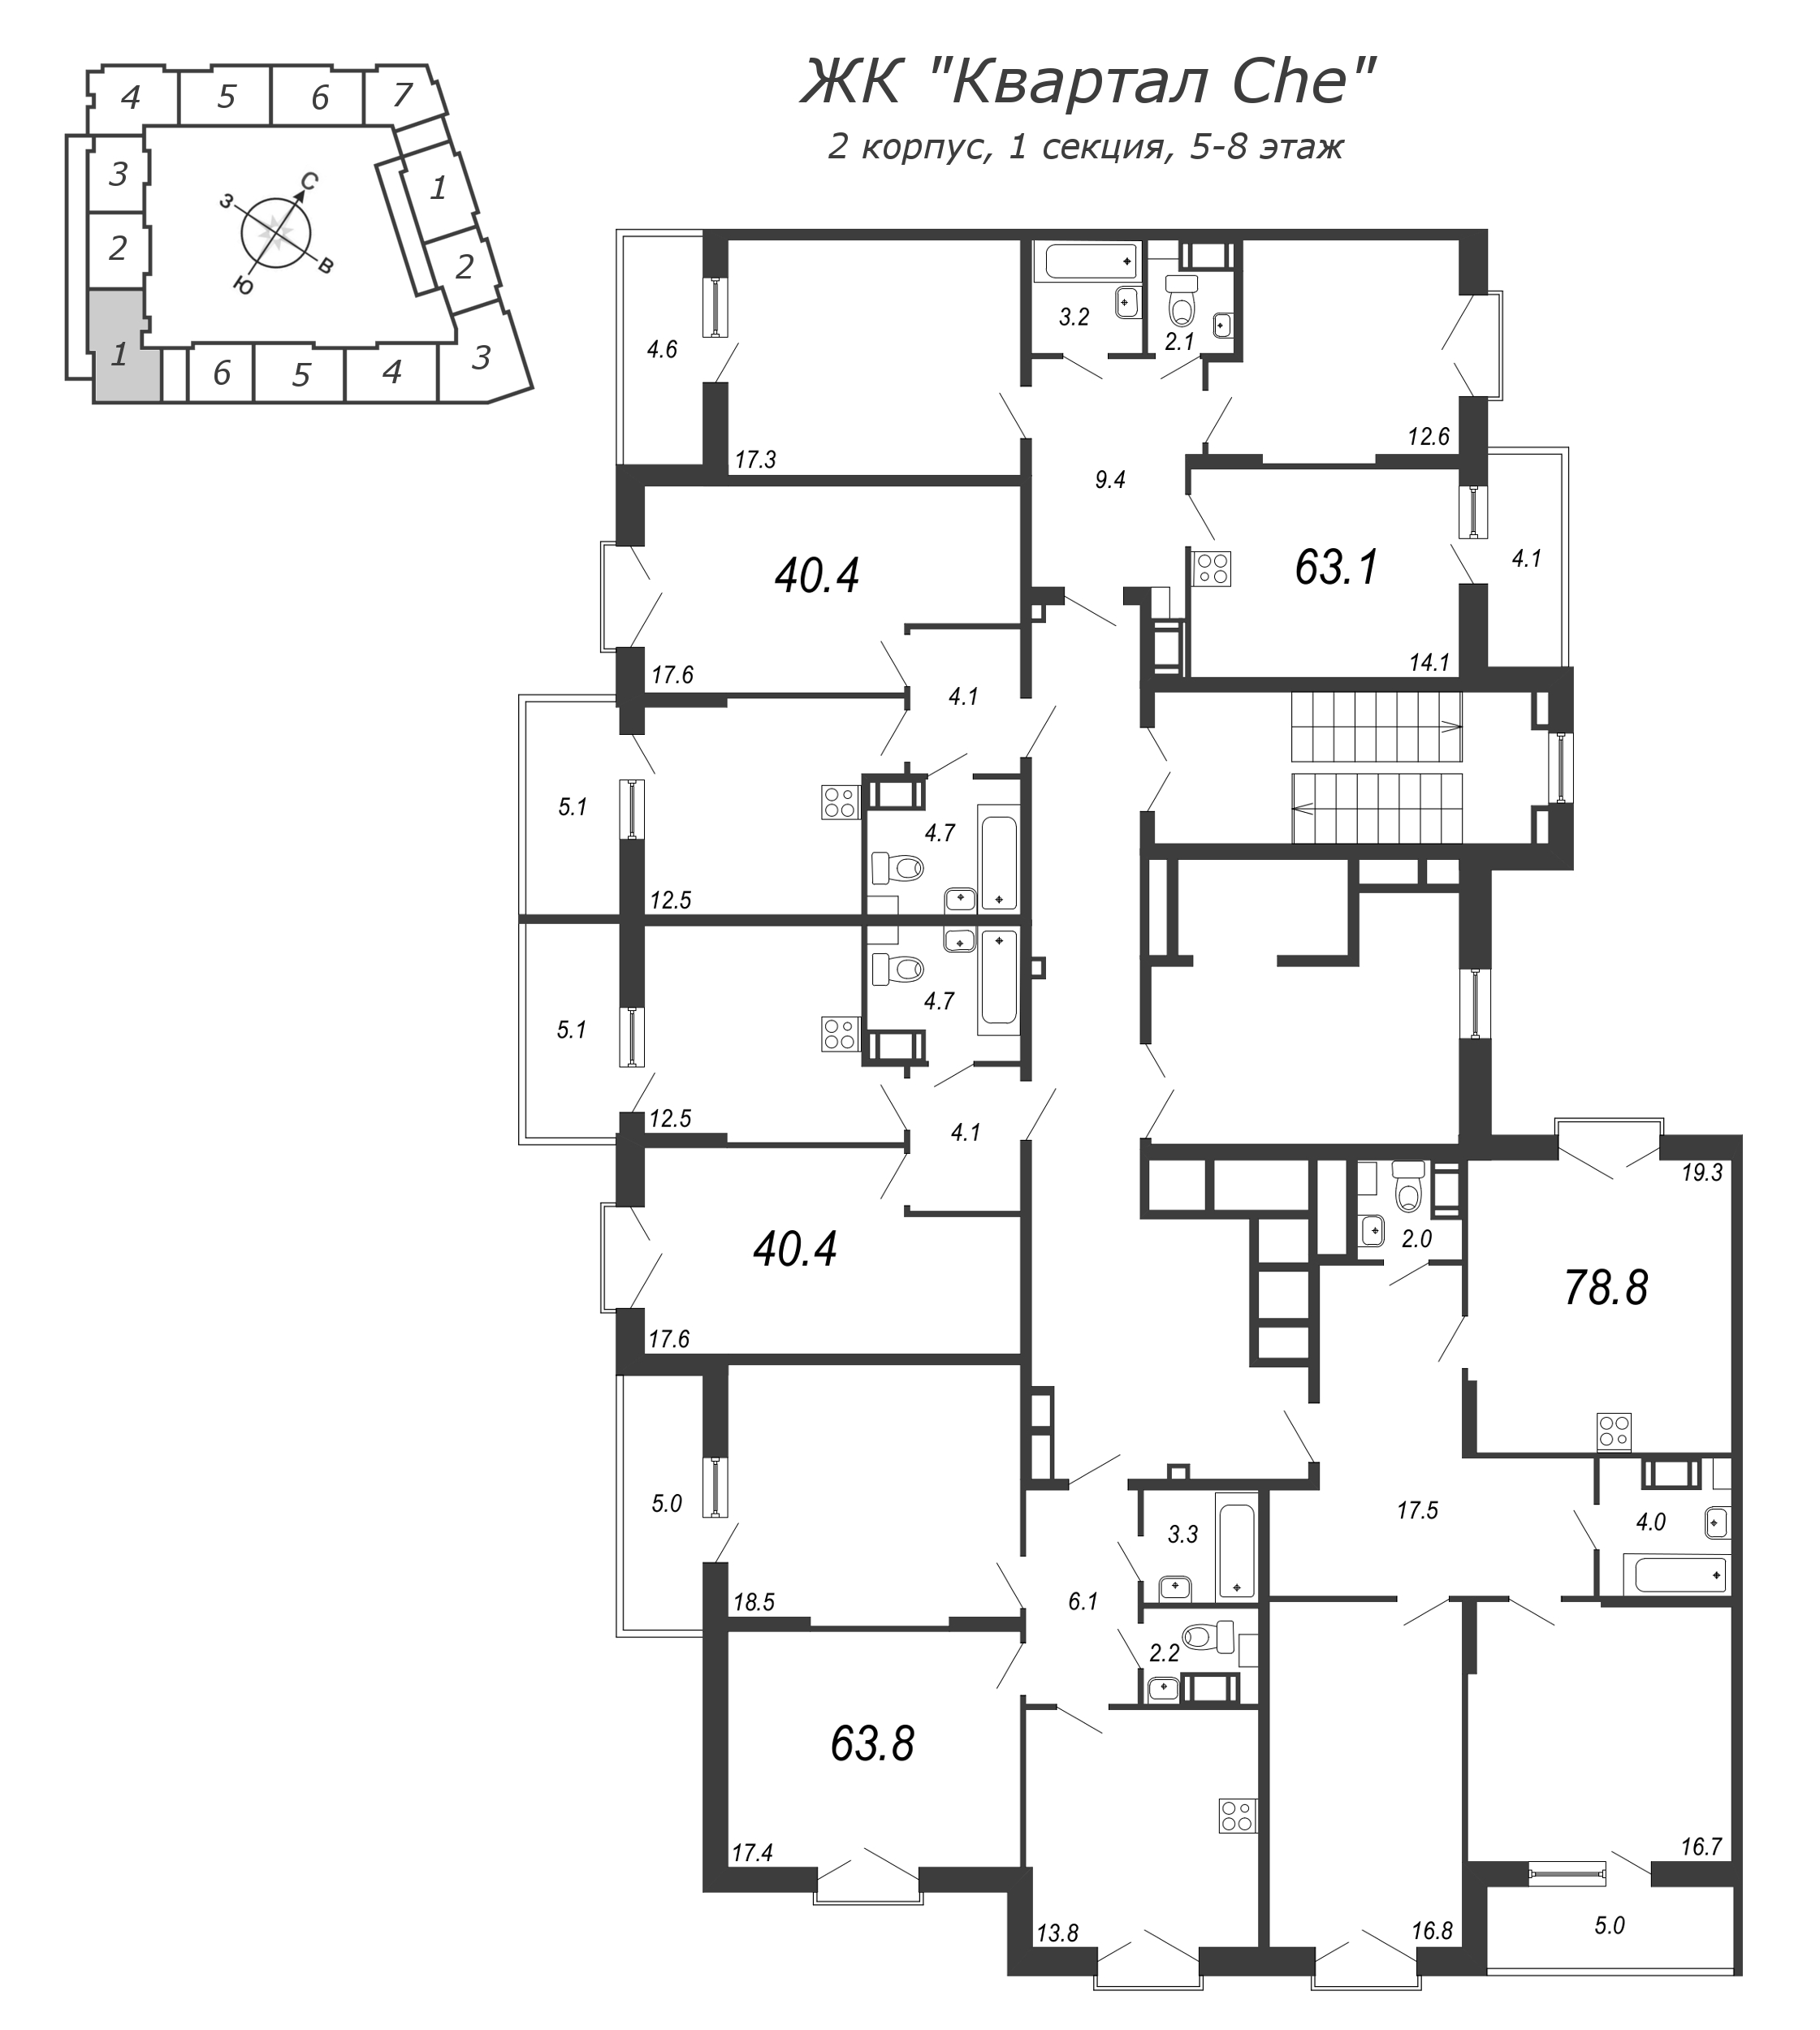 2-комнатная квартира, 64.3 м² в ЖК "Квартал Che" - планировка этажа